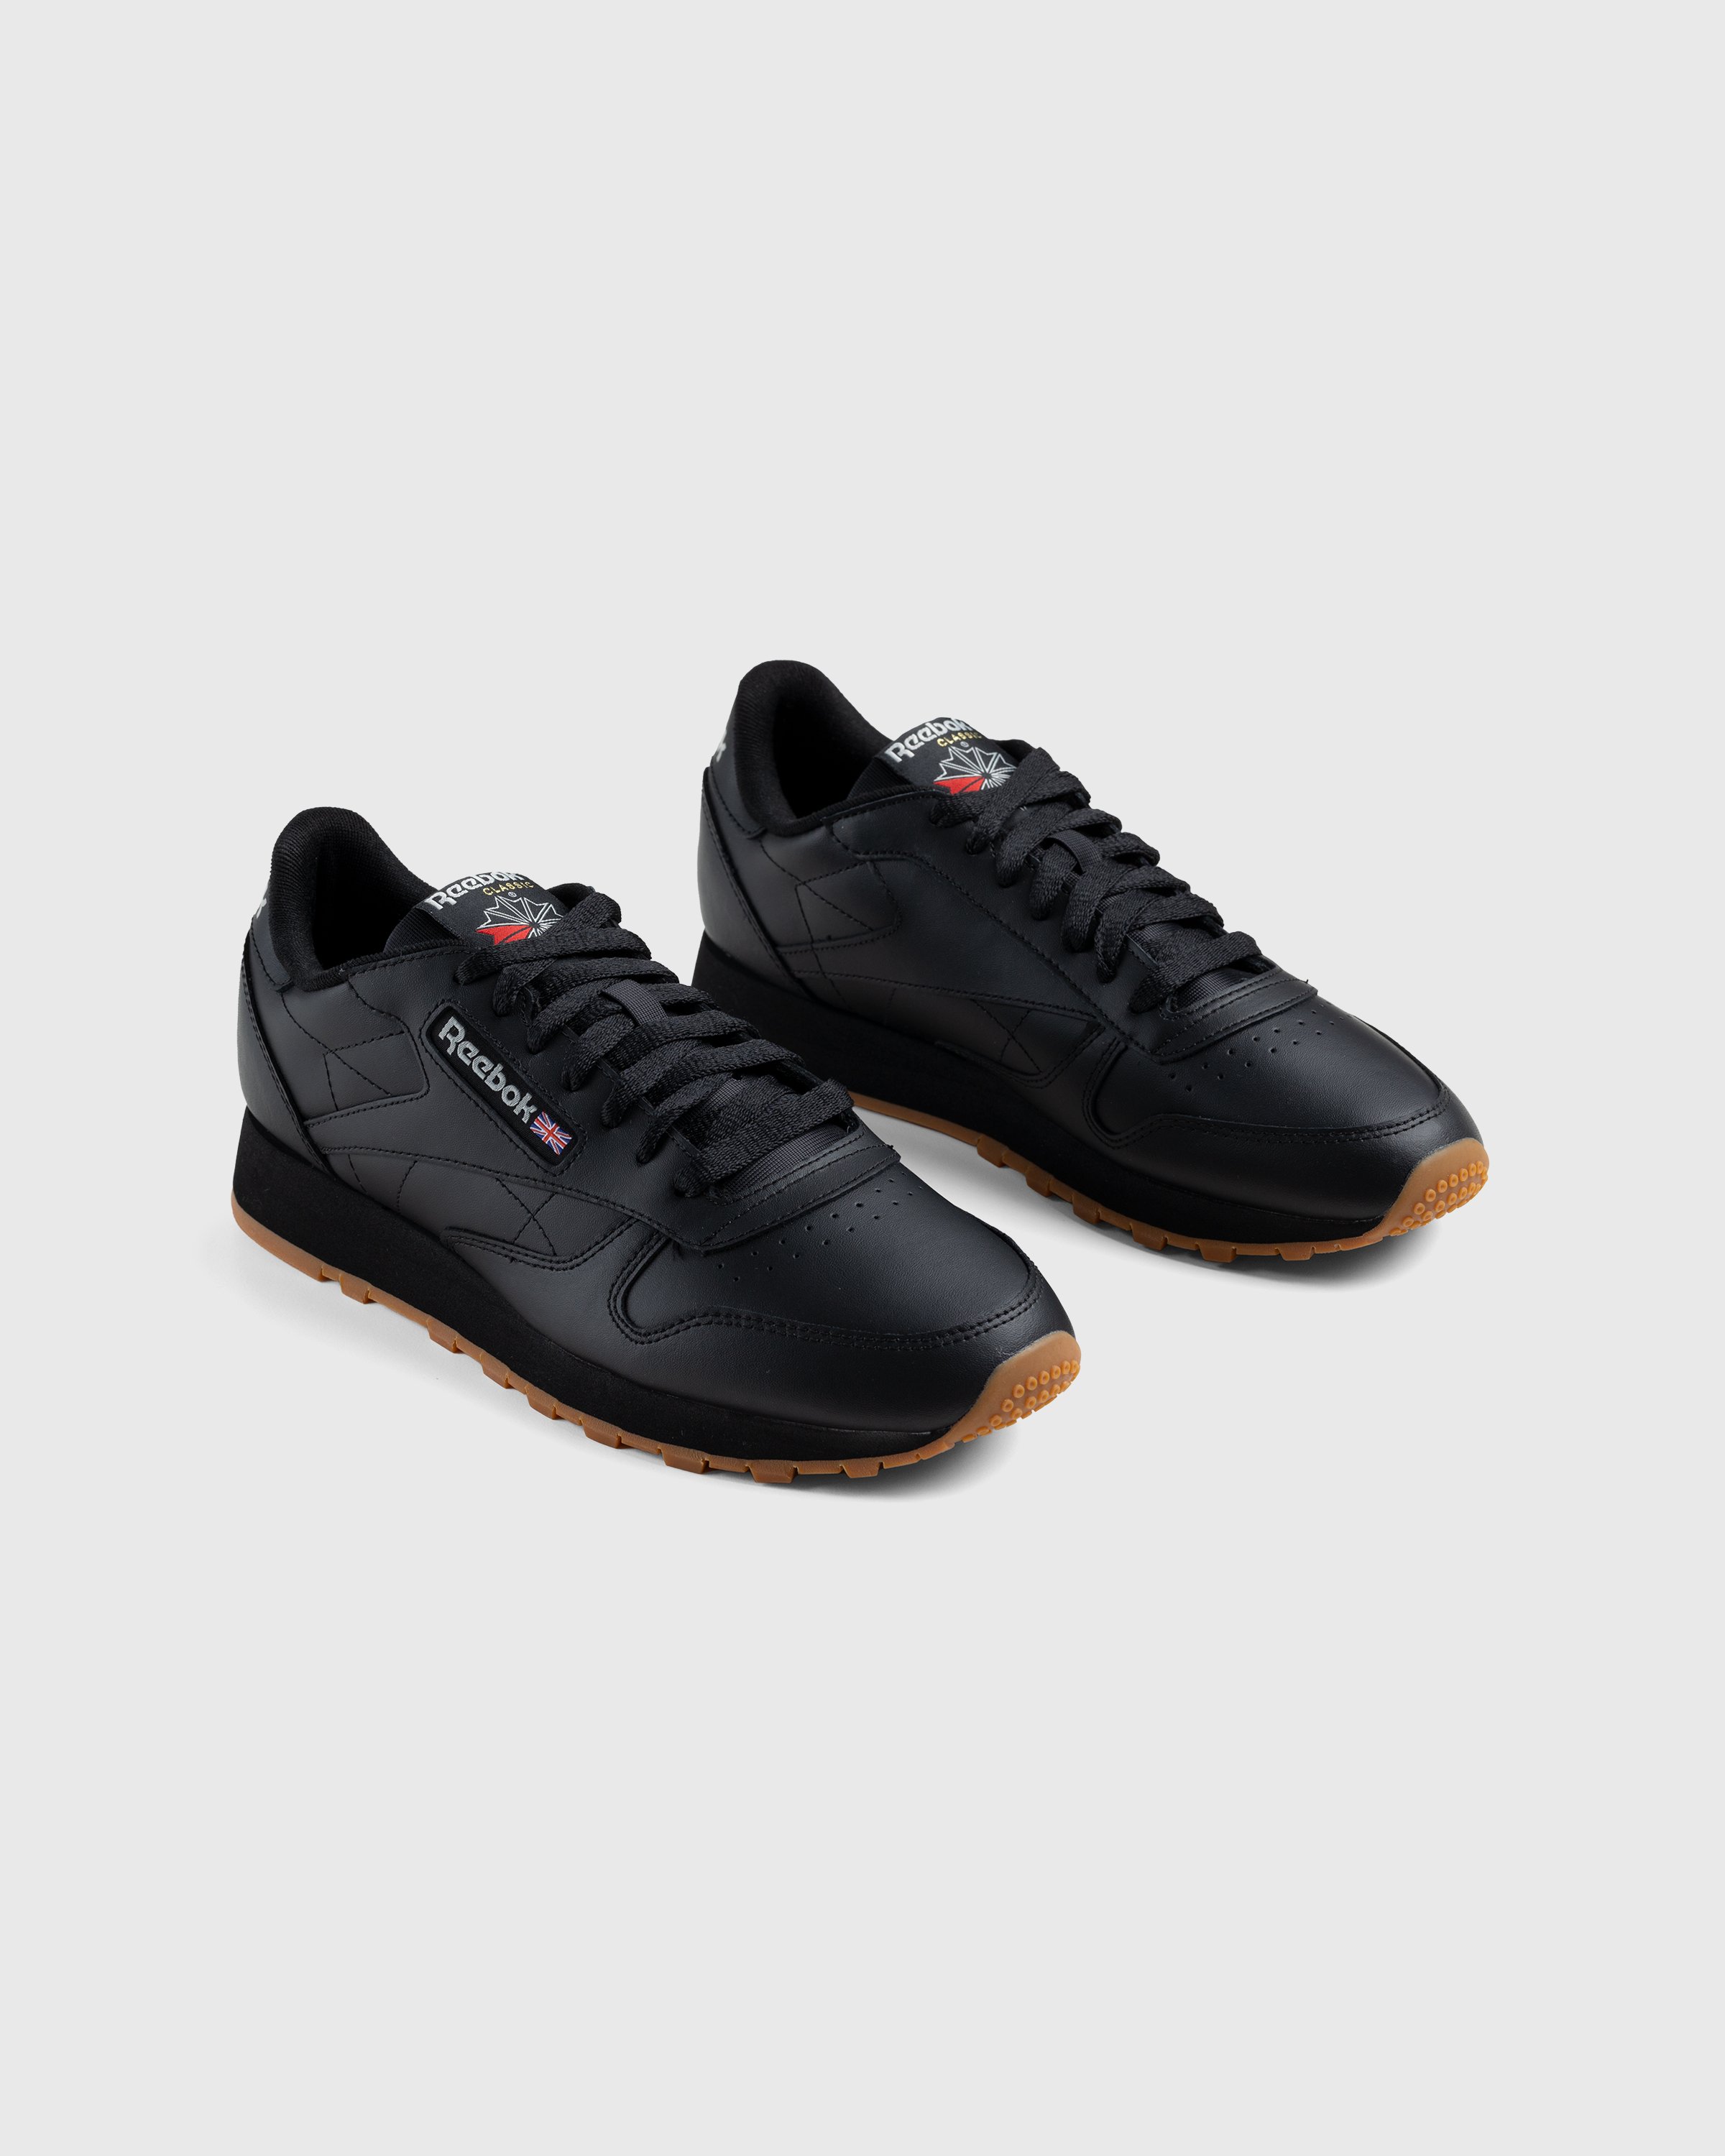 Reebok - Classic Leather Black - Footwear - Black - Image 2